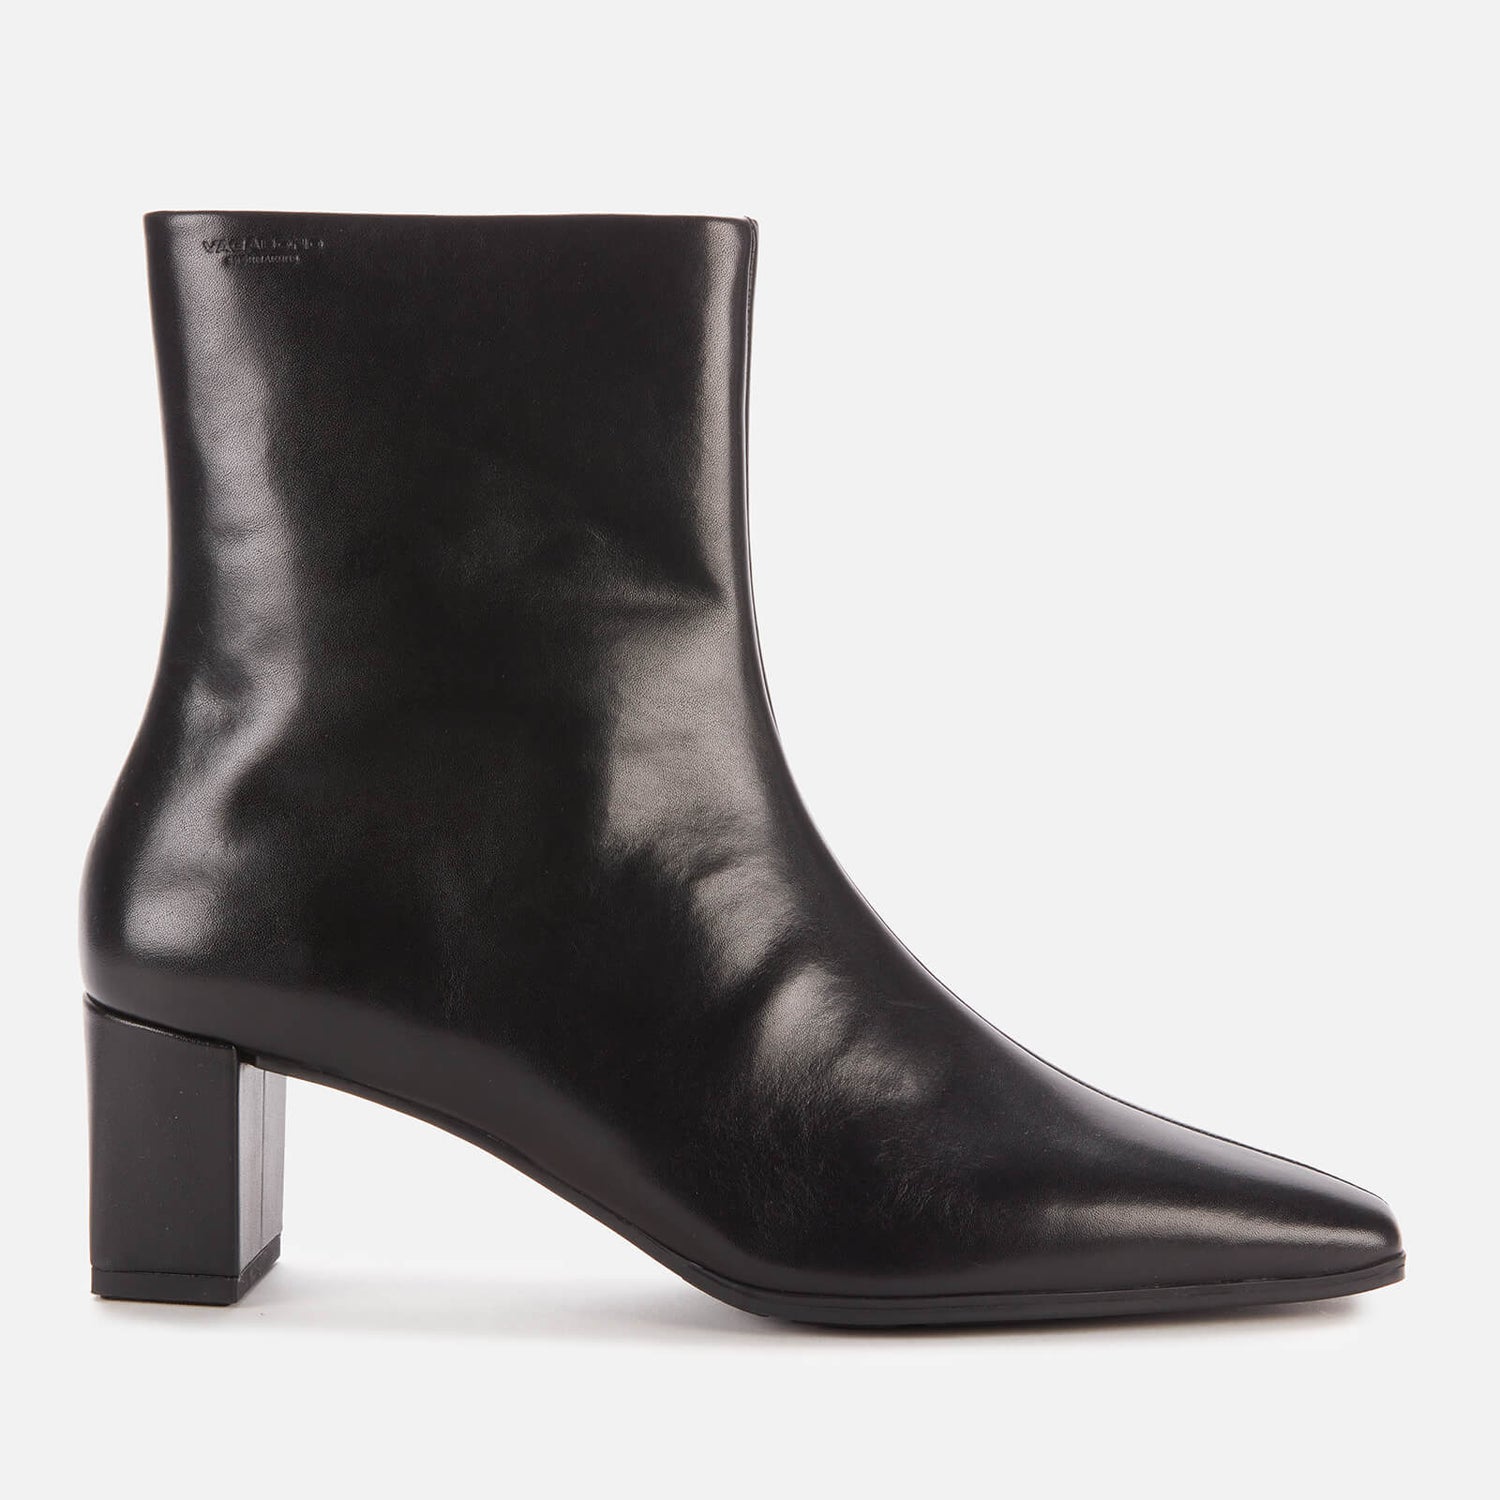 Vagabond Women's Tessa Leather Ankle Boots - Black